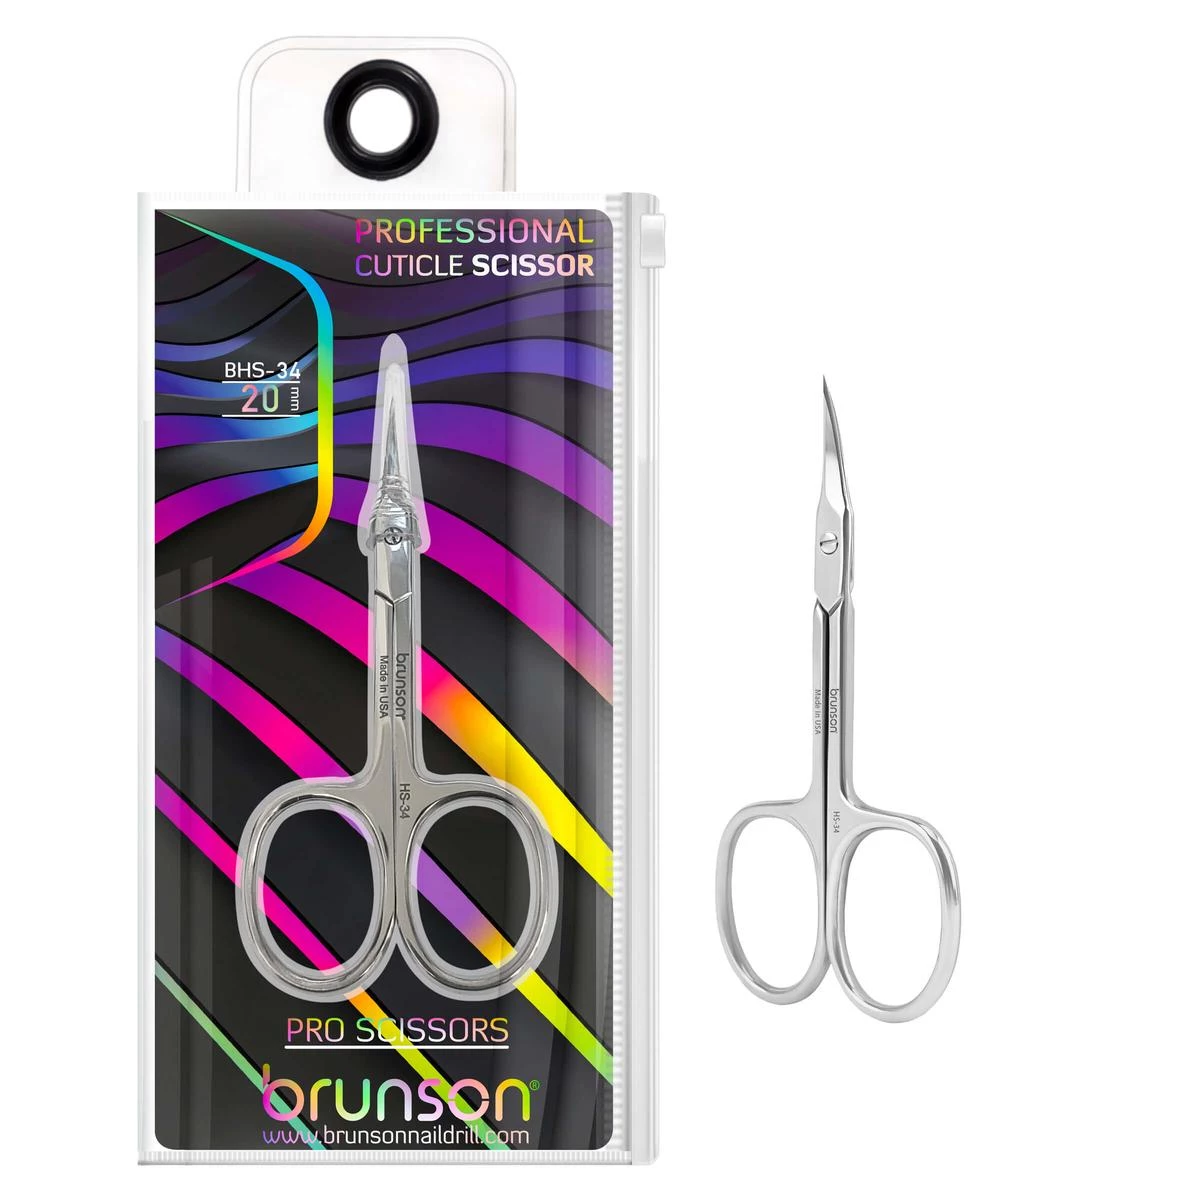 Professional-Cuticle-Scissors-BHS-34-Brunson-1